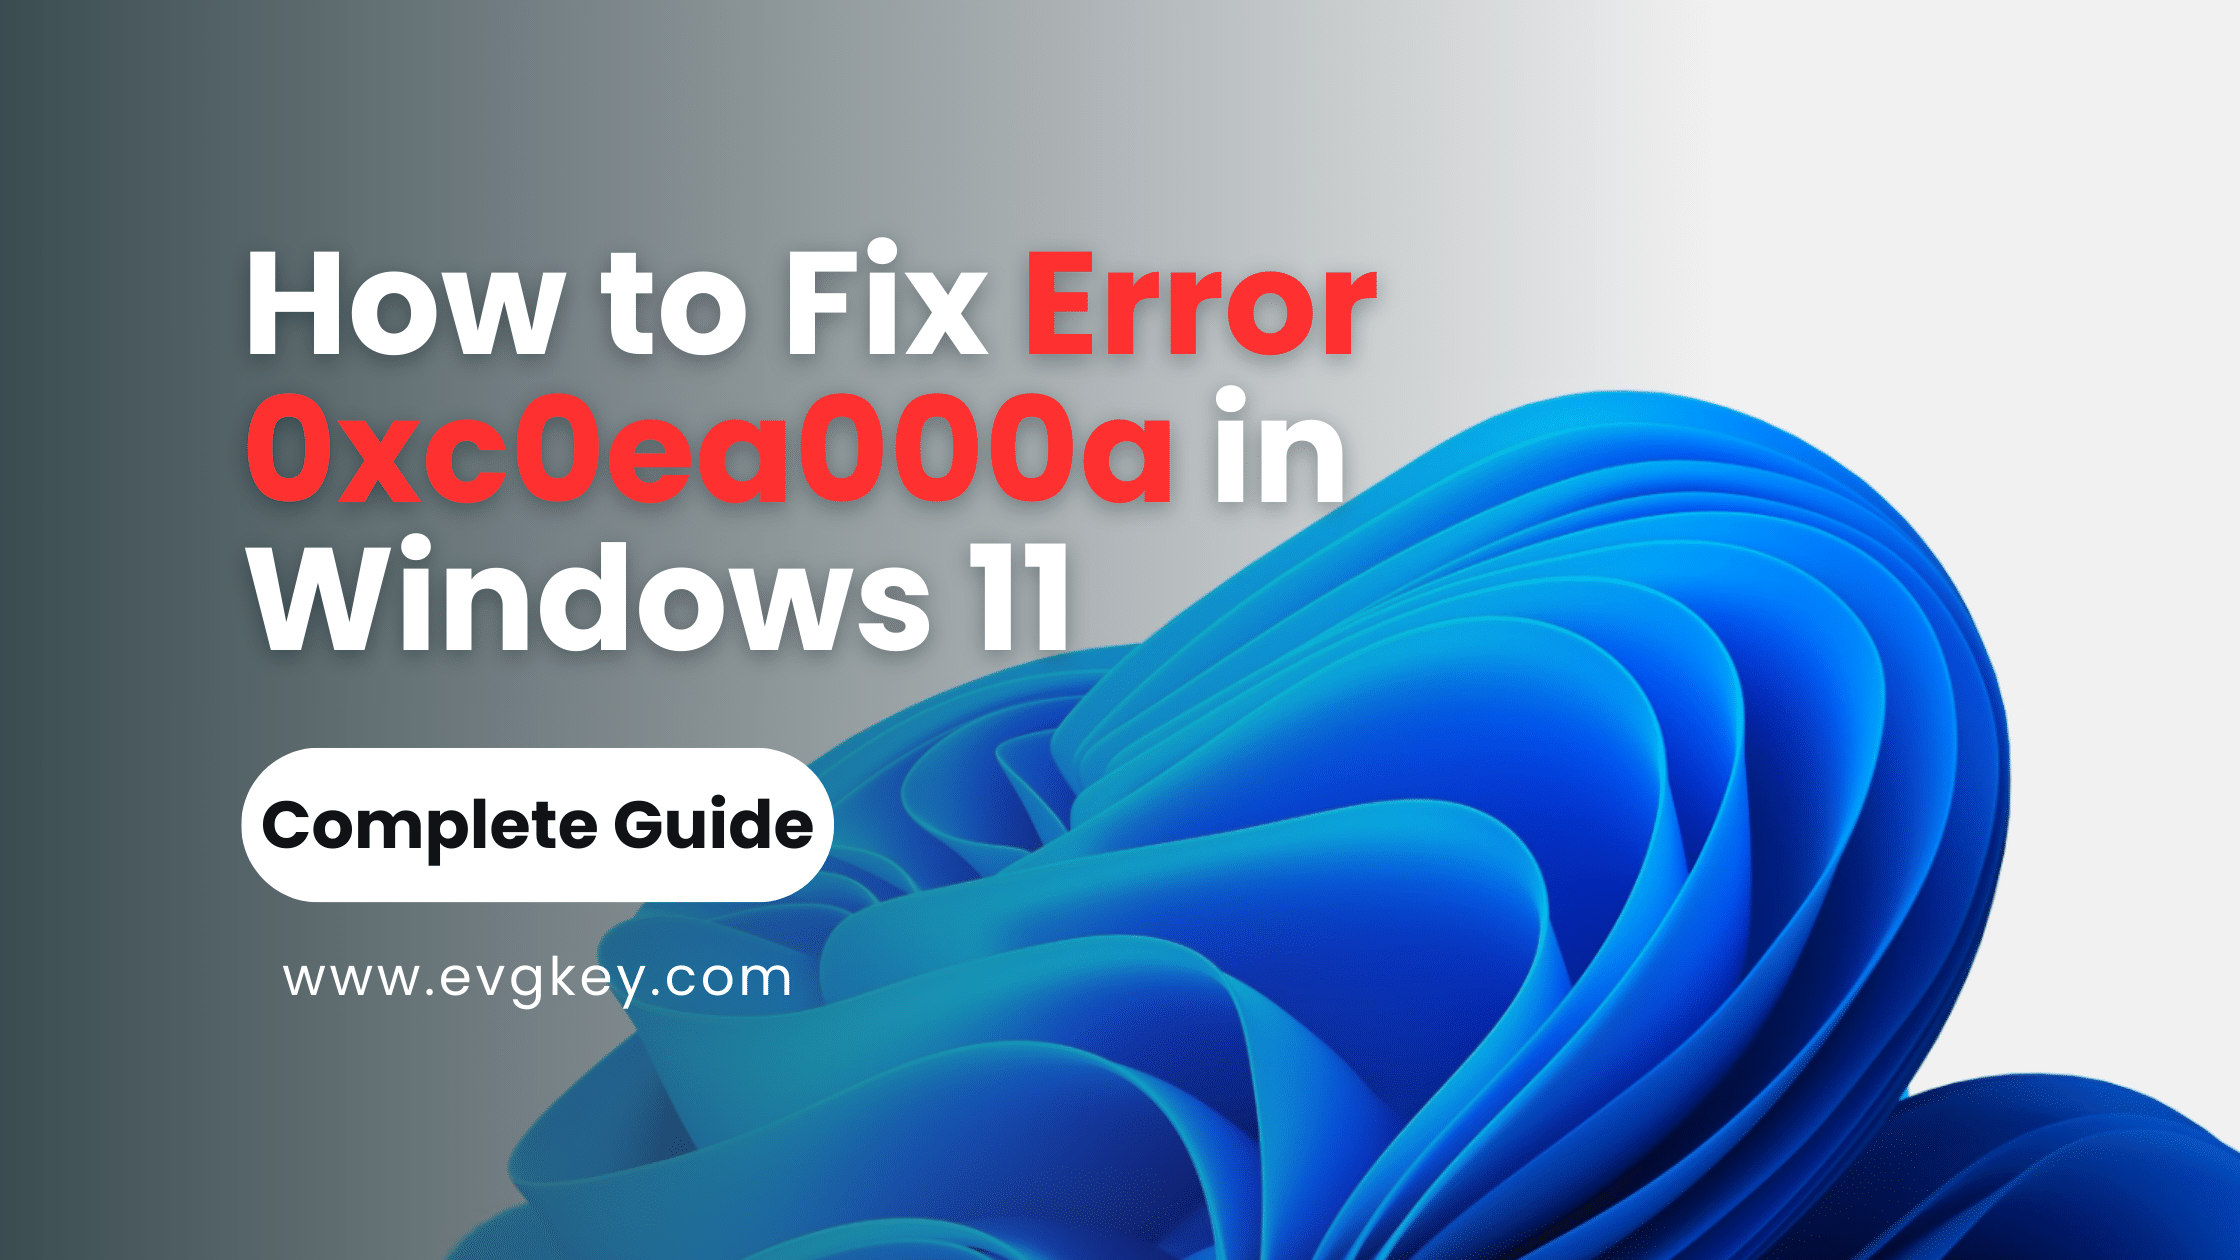 How to Fix Error 0xc0ea000a in Windows 11